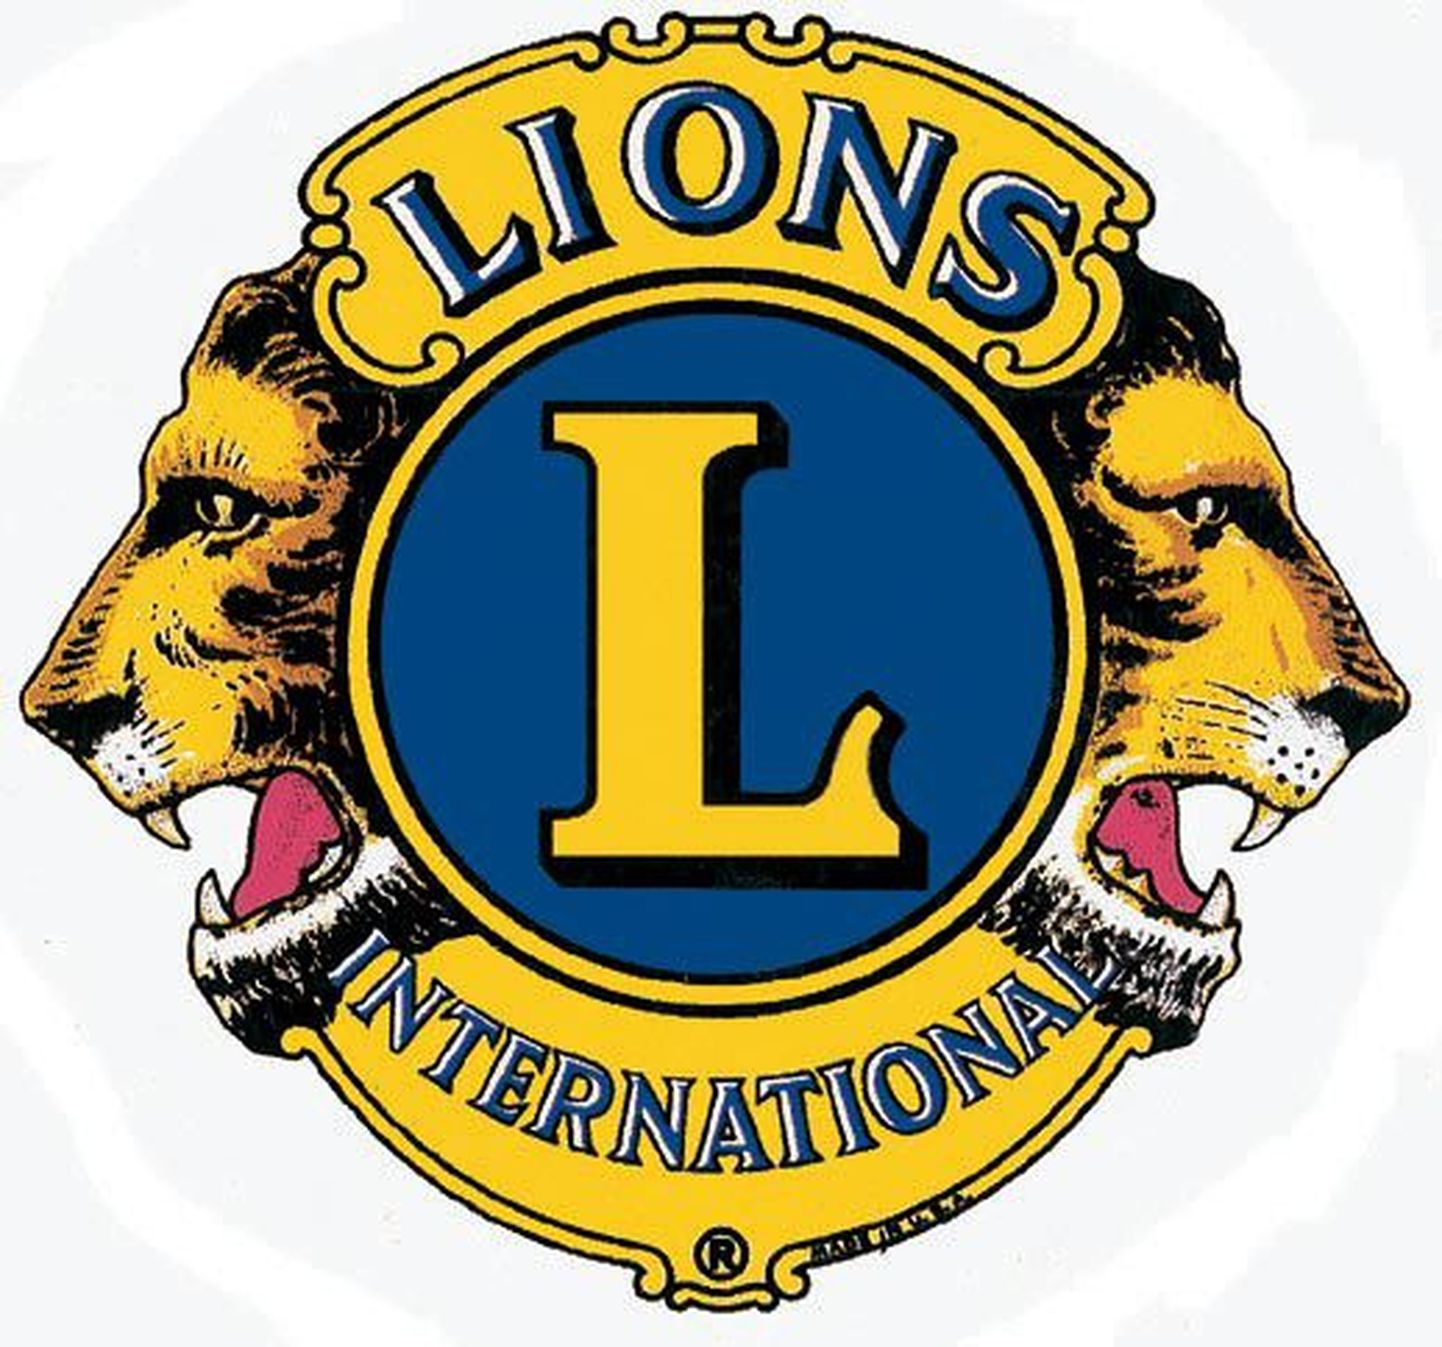 Lions Clubi logo.